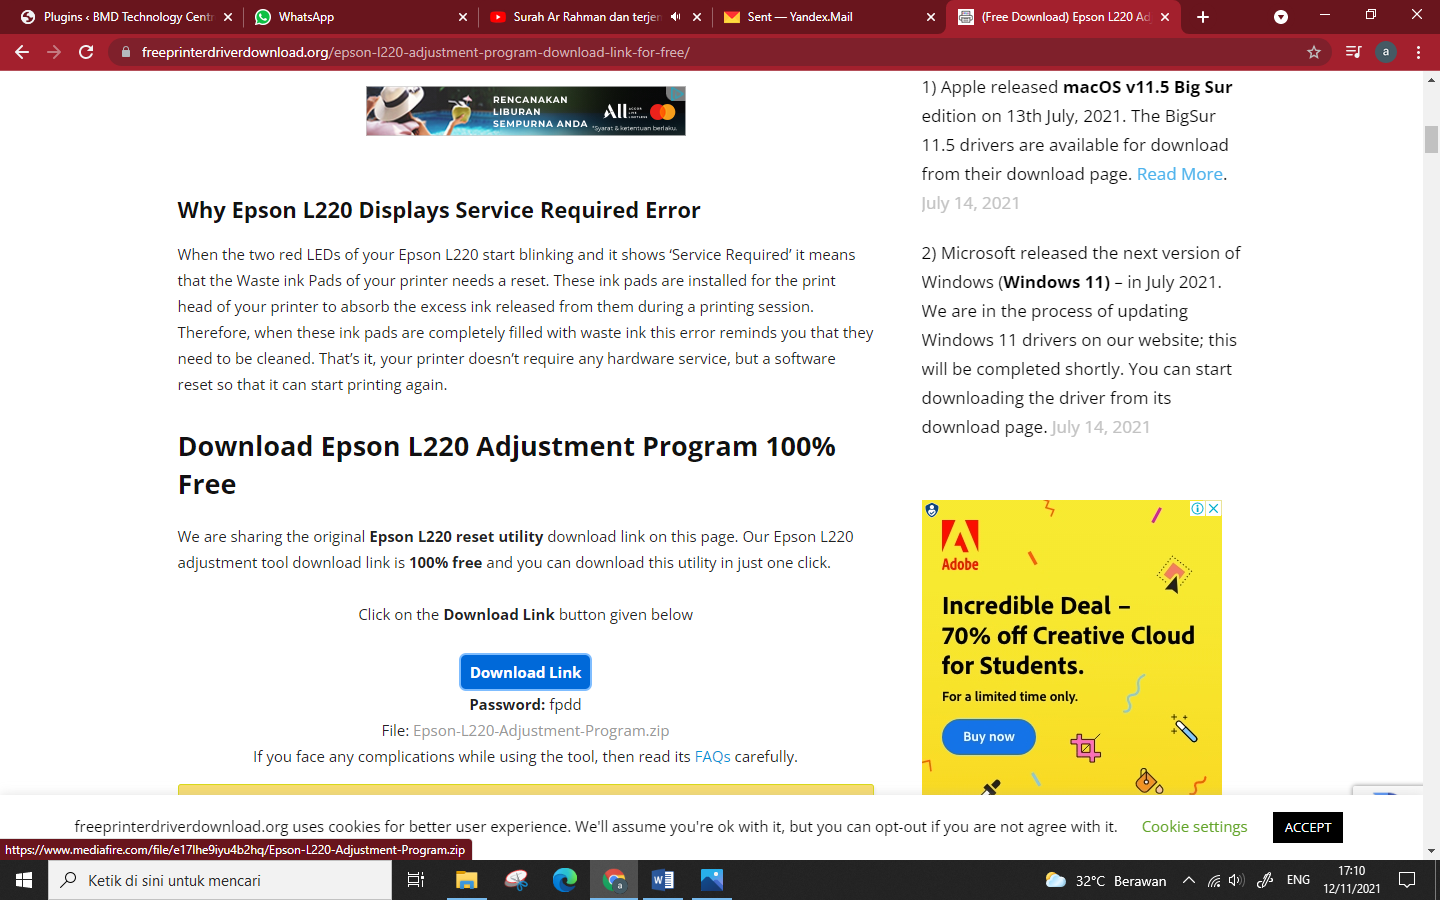 epson l220 adjustment program original